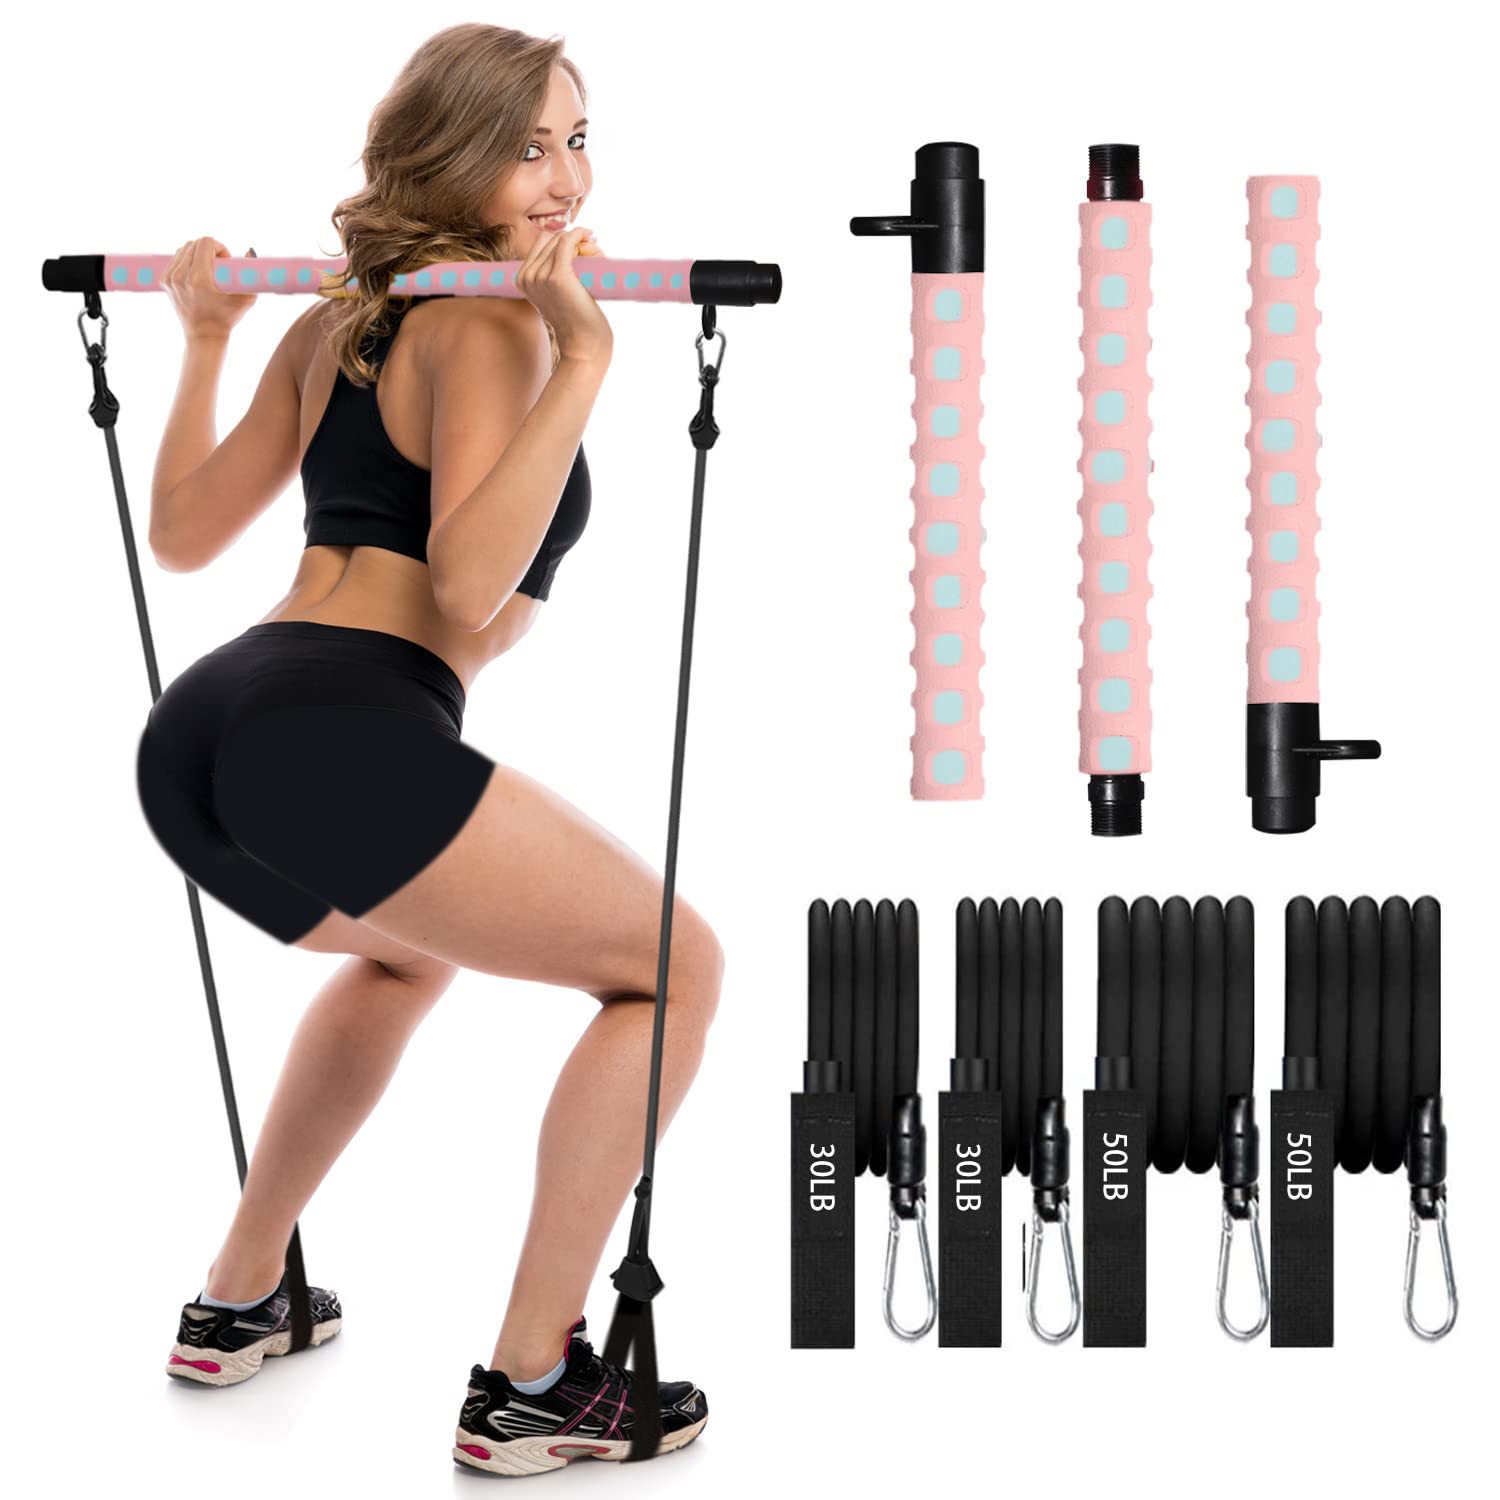 Adjustable Pilates Bar kit with 4 Resistance Bands, Portable